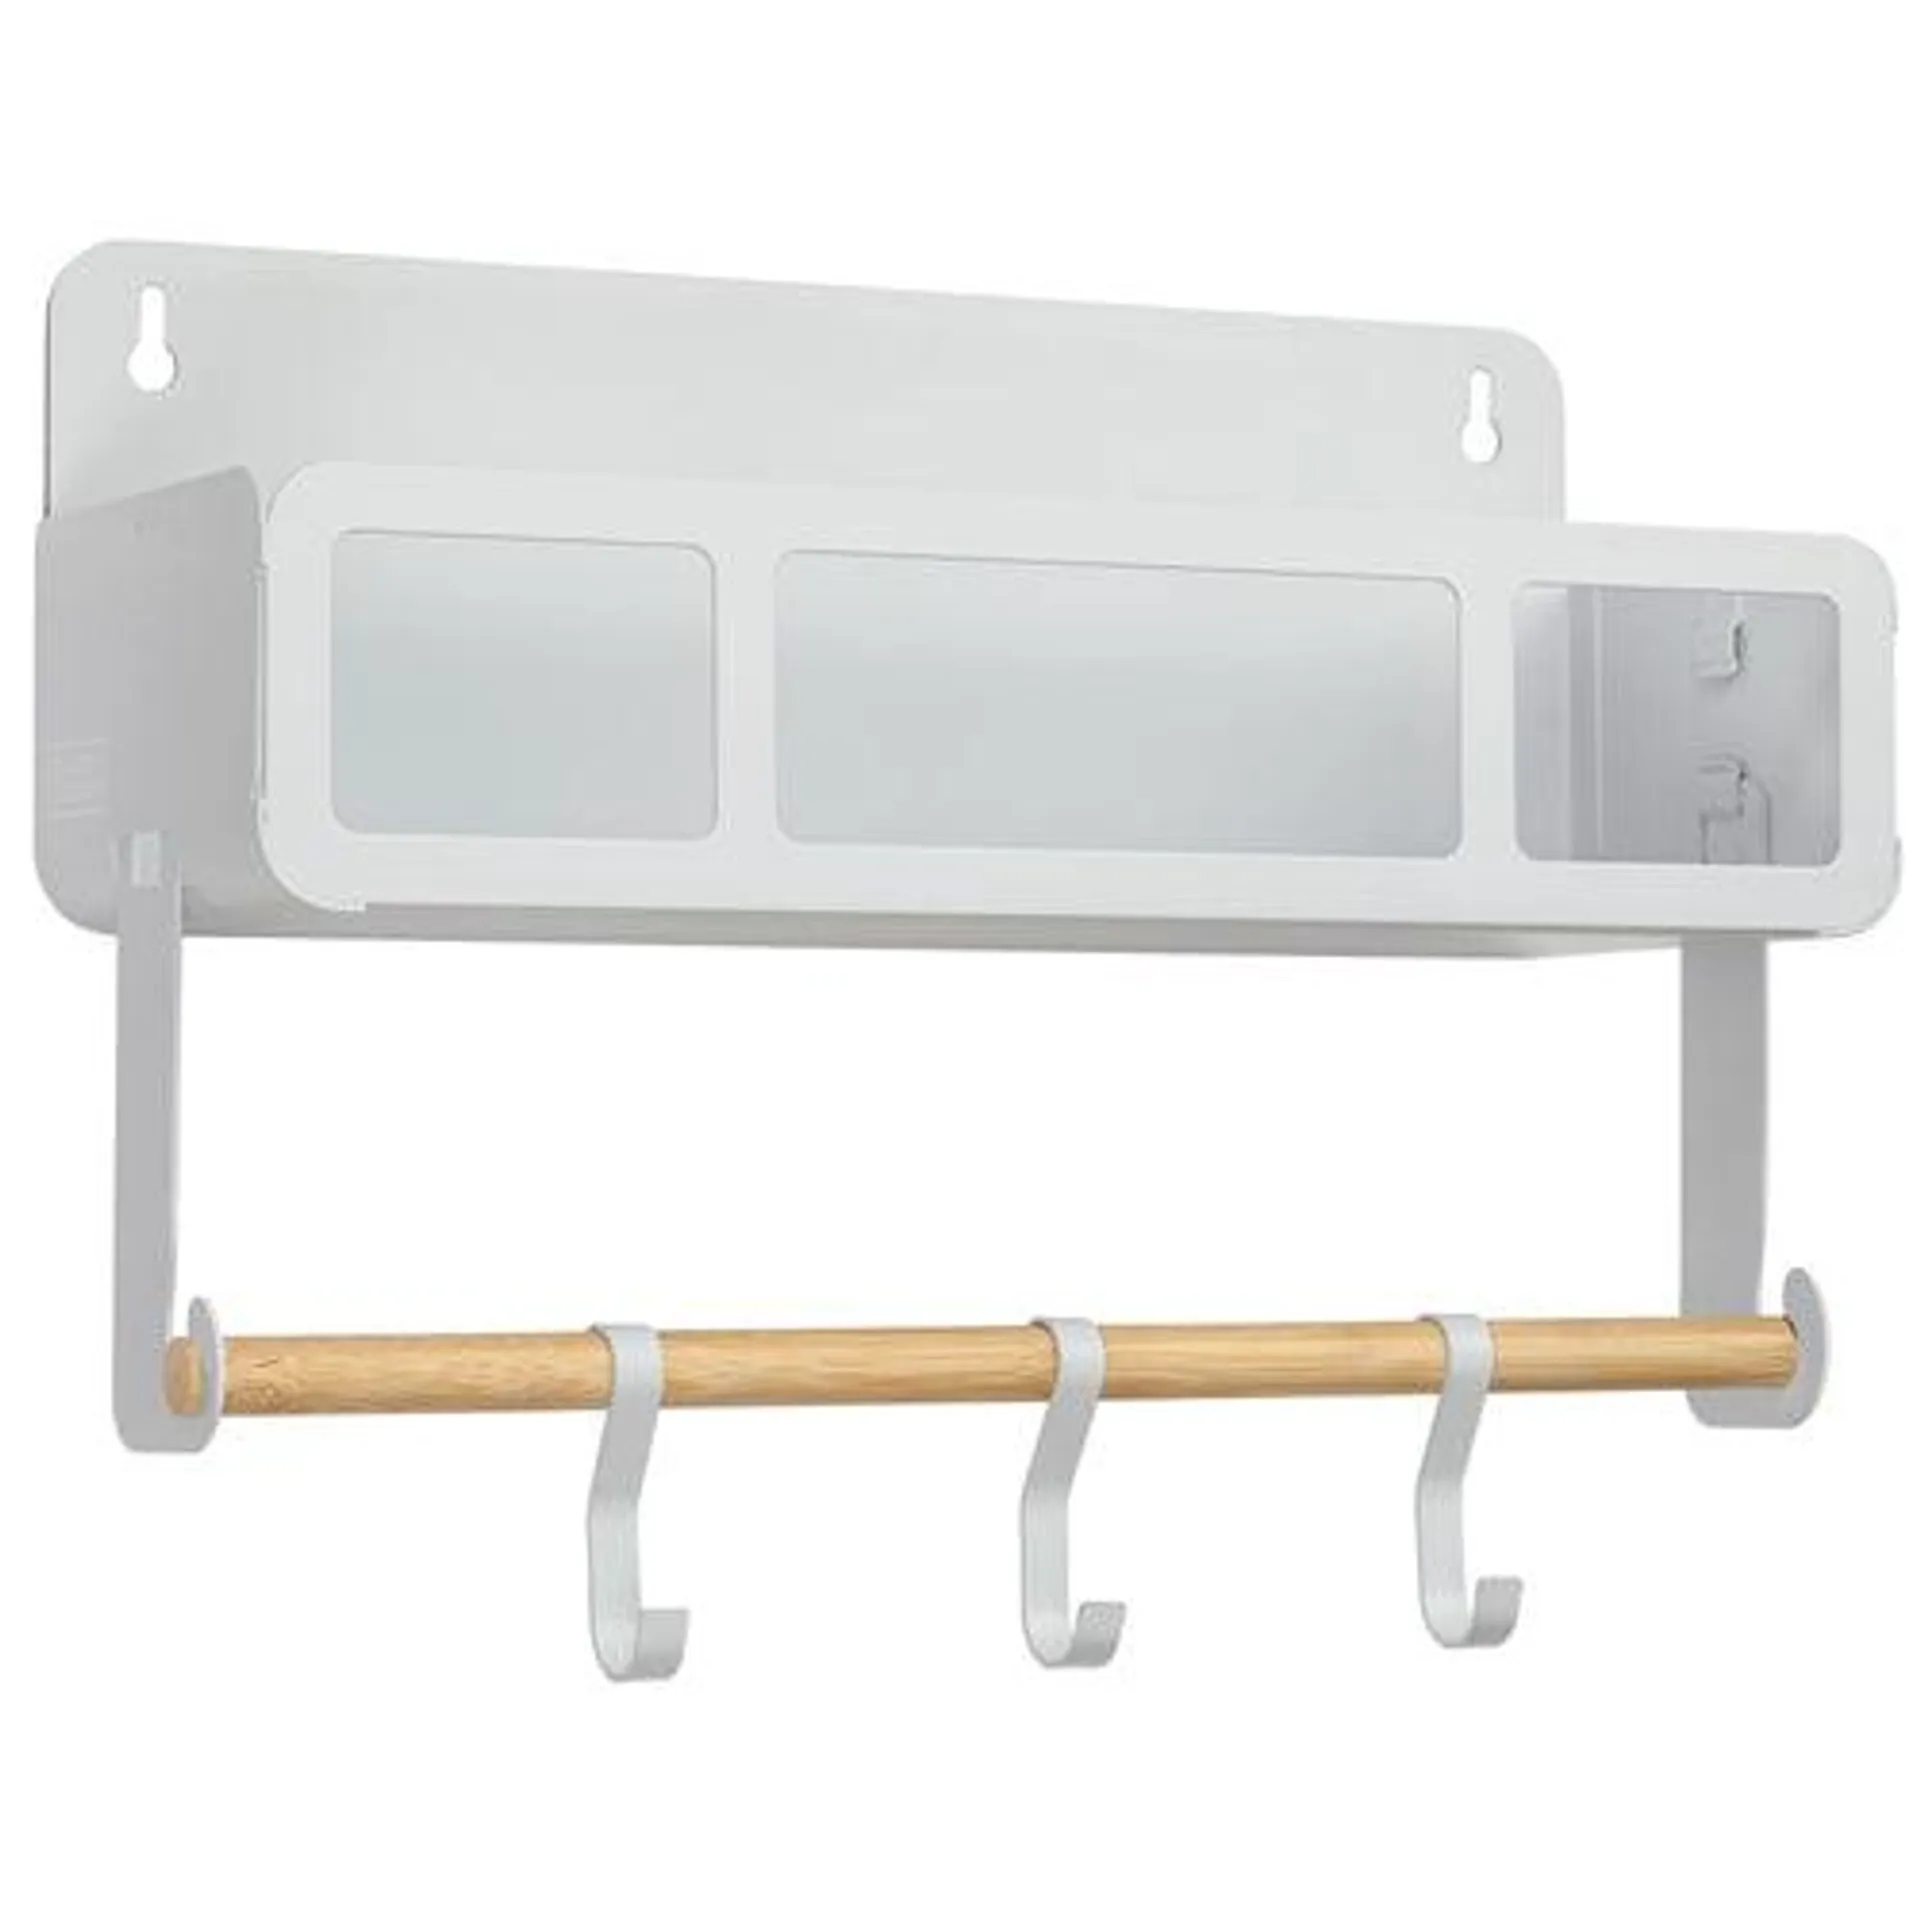 Hanging / Magnetic Rack System-Shelf W/Brackets